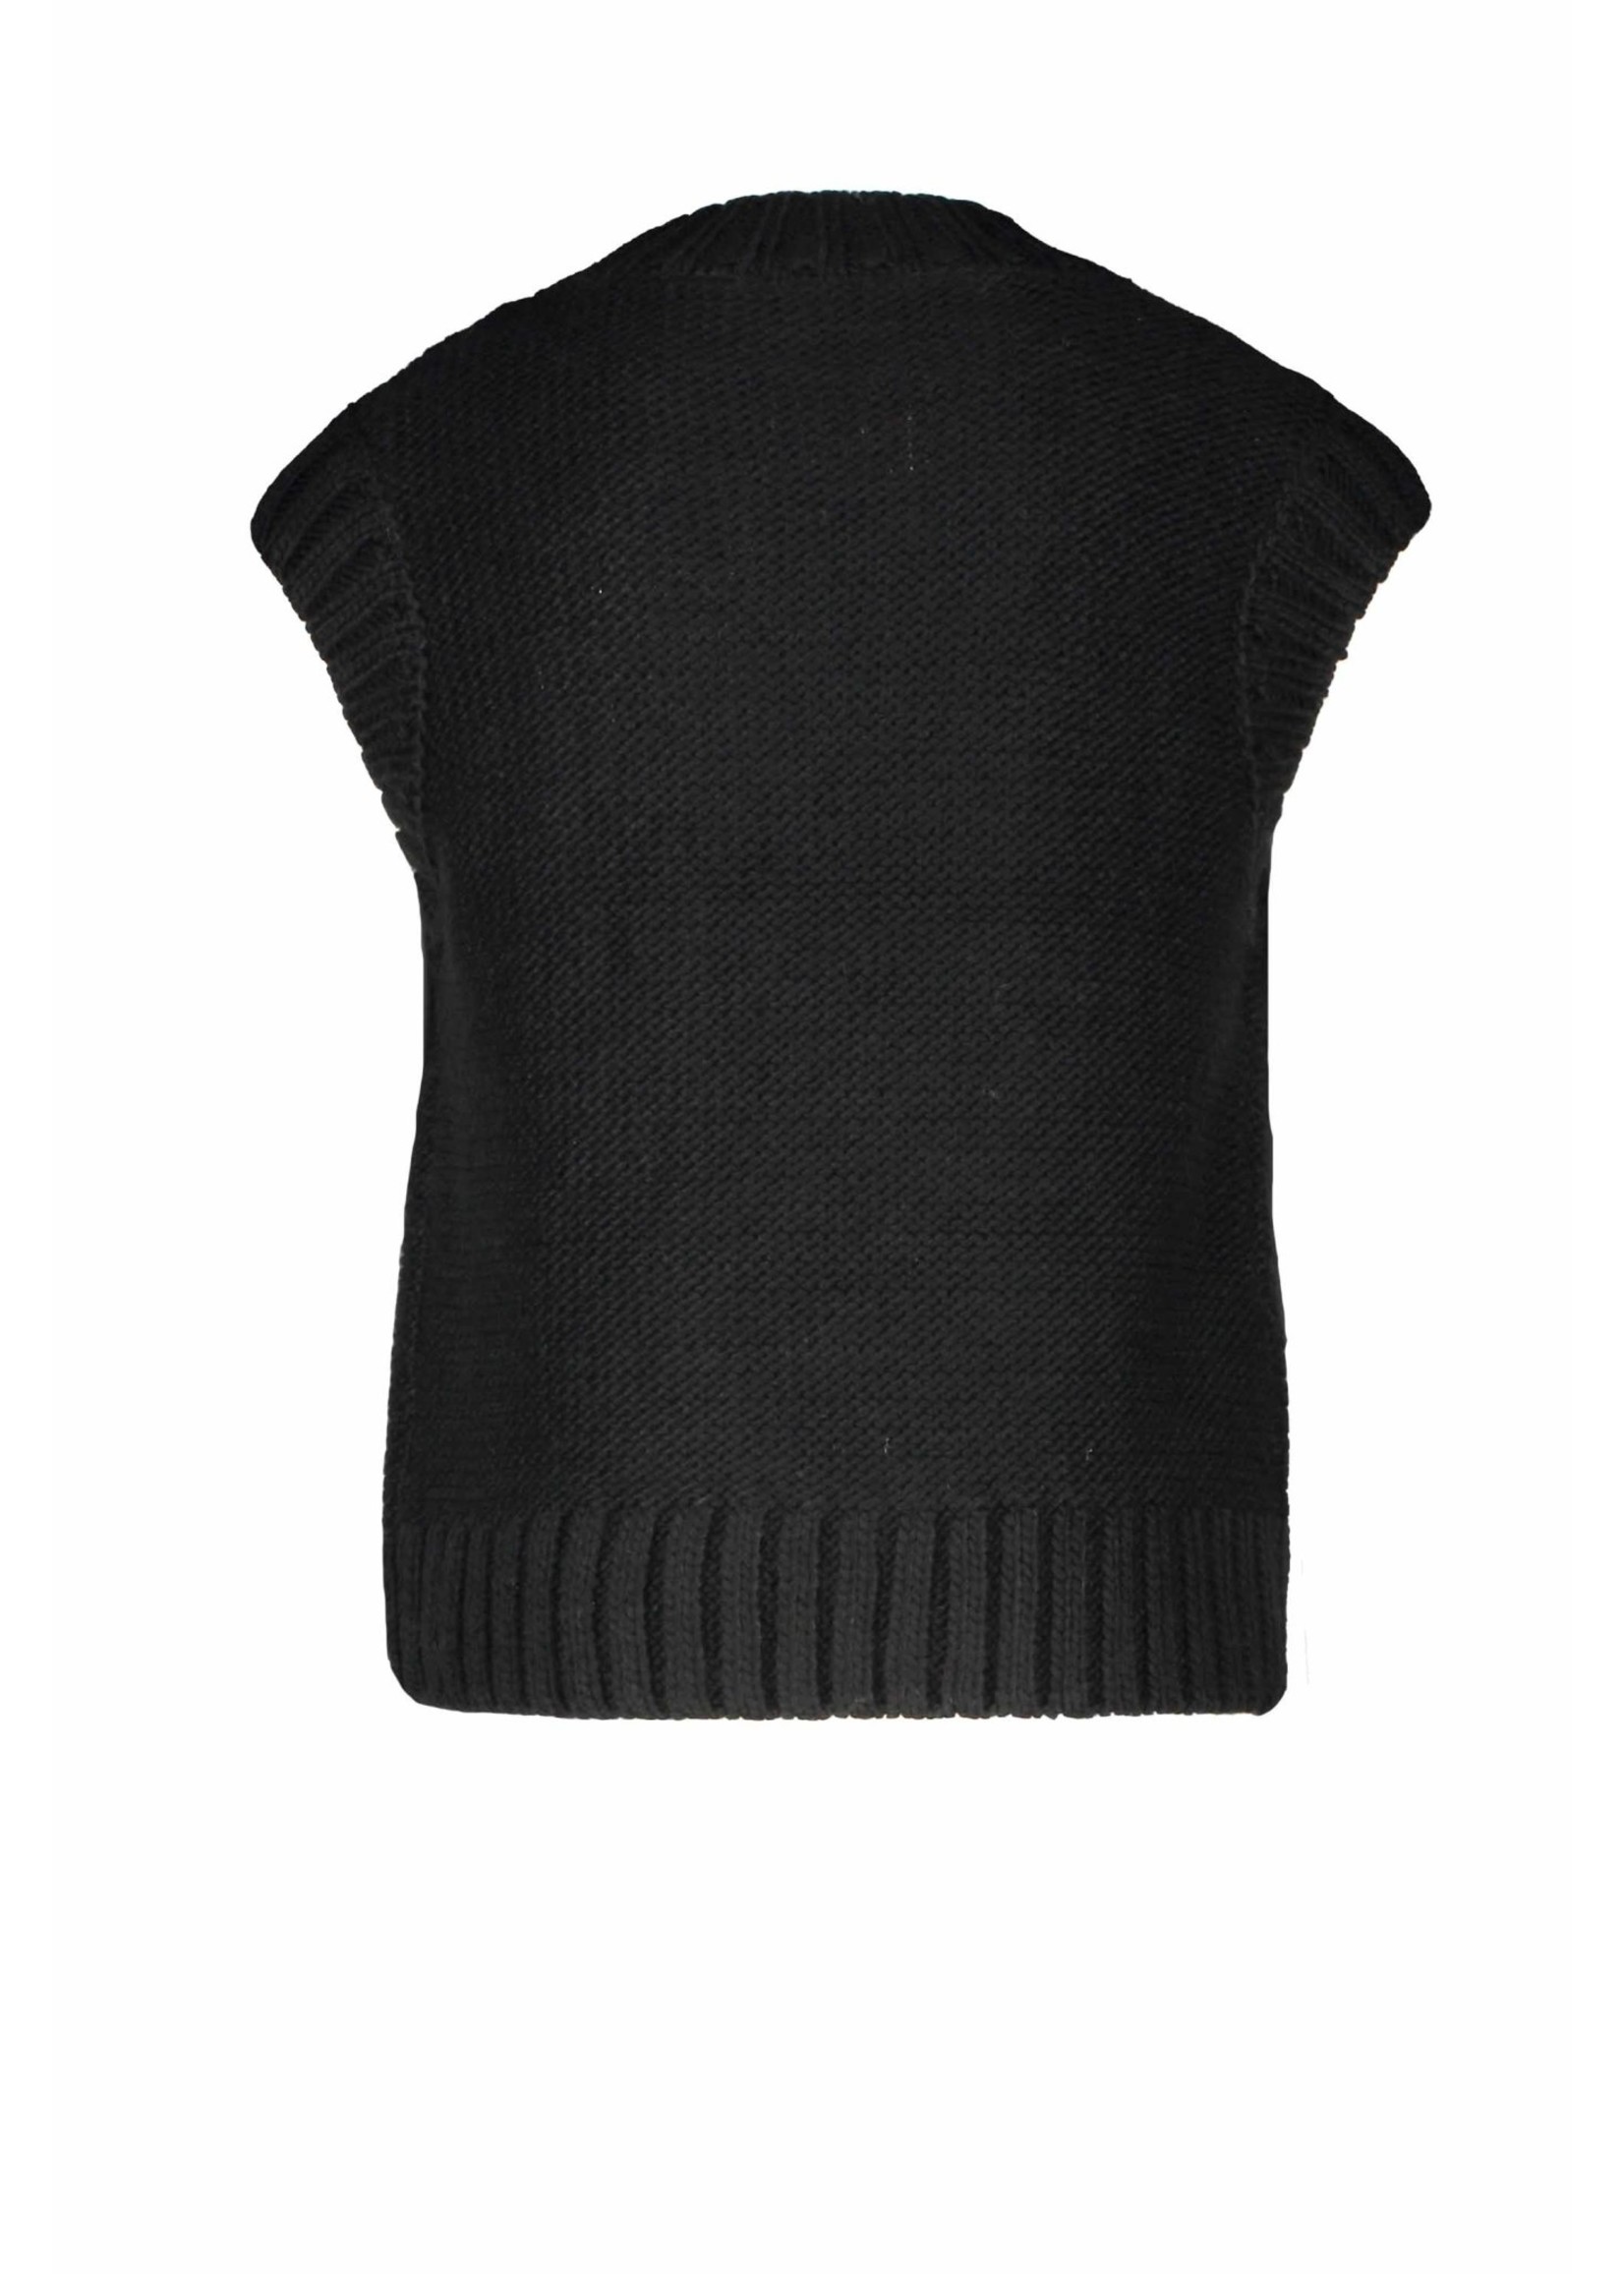 Cece knit - Black